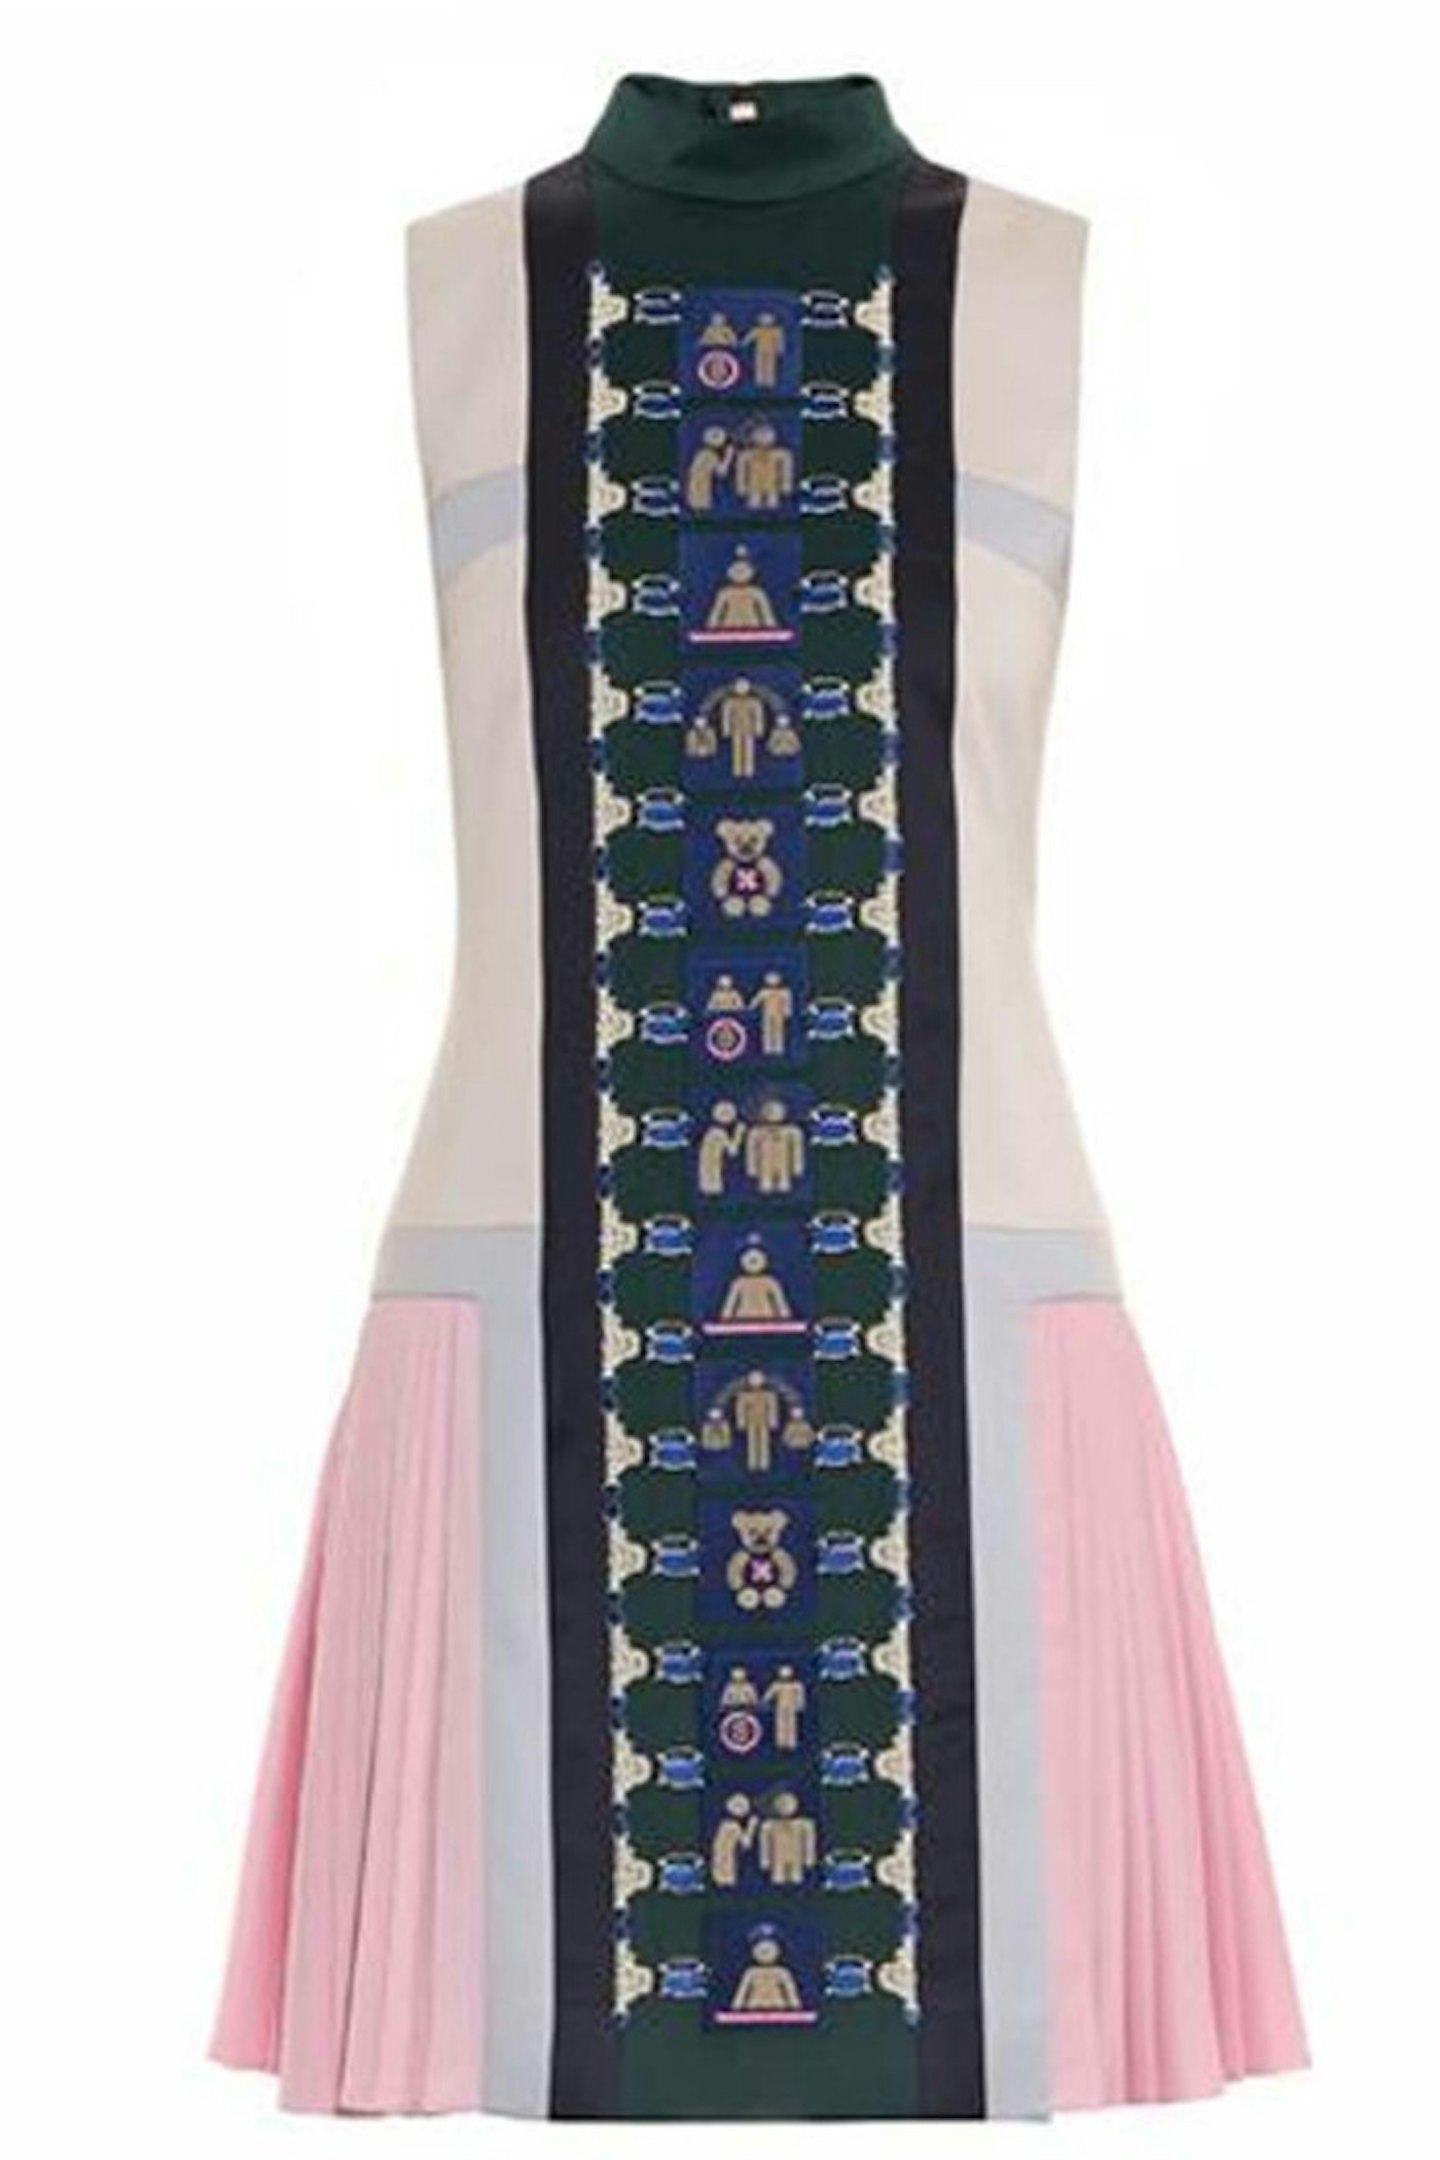 33. Embroidered pleated dress, £3726, Mary Katrantzou